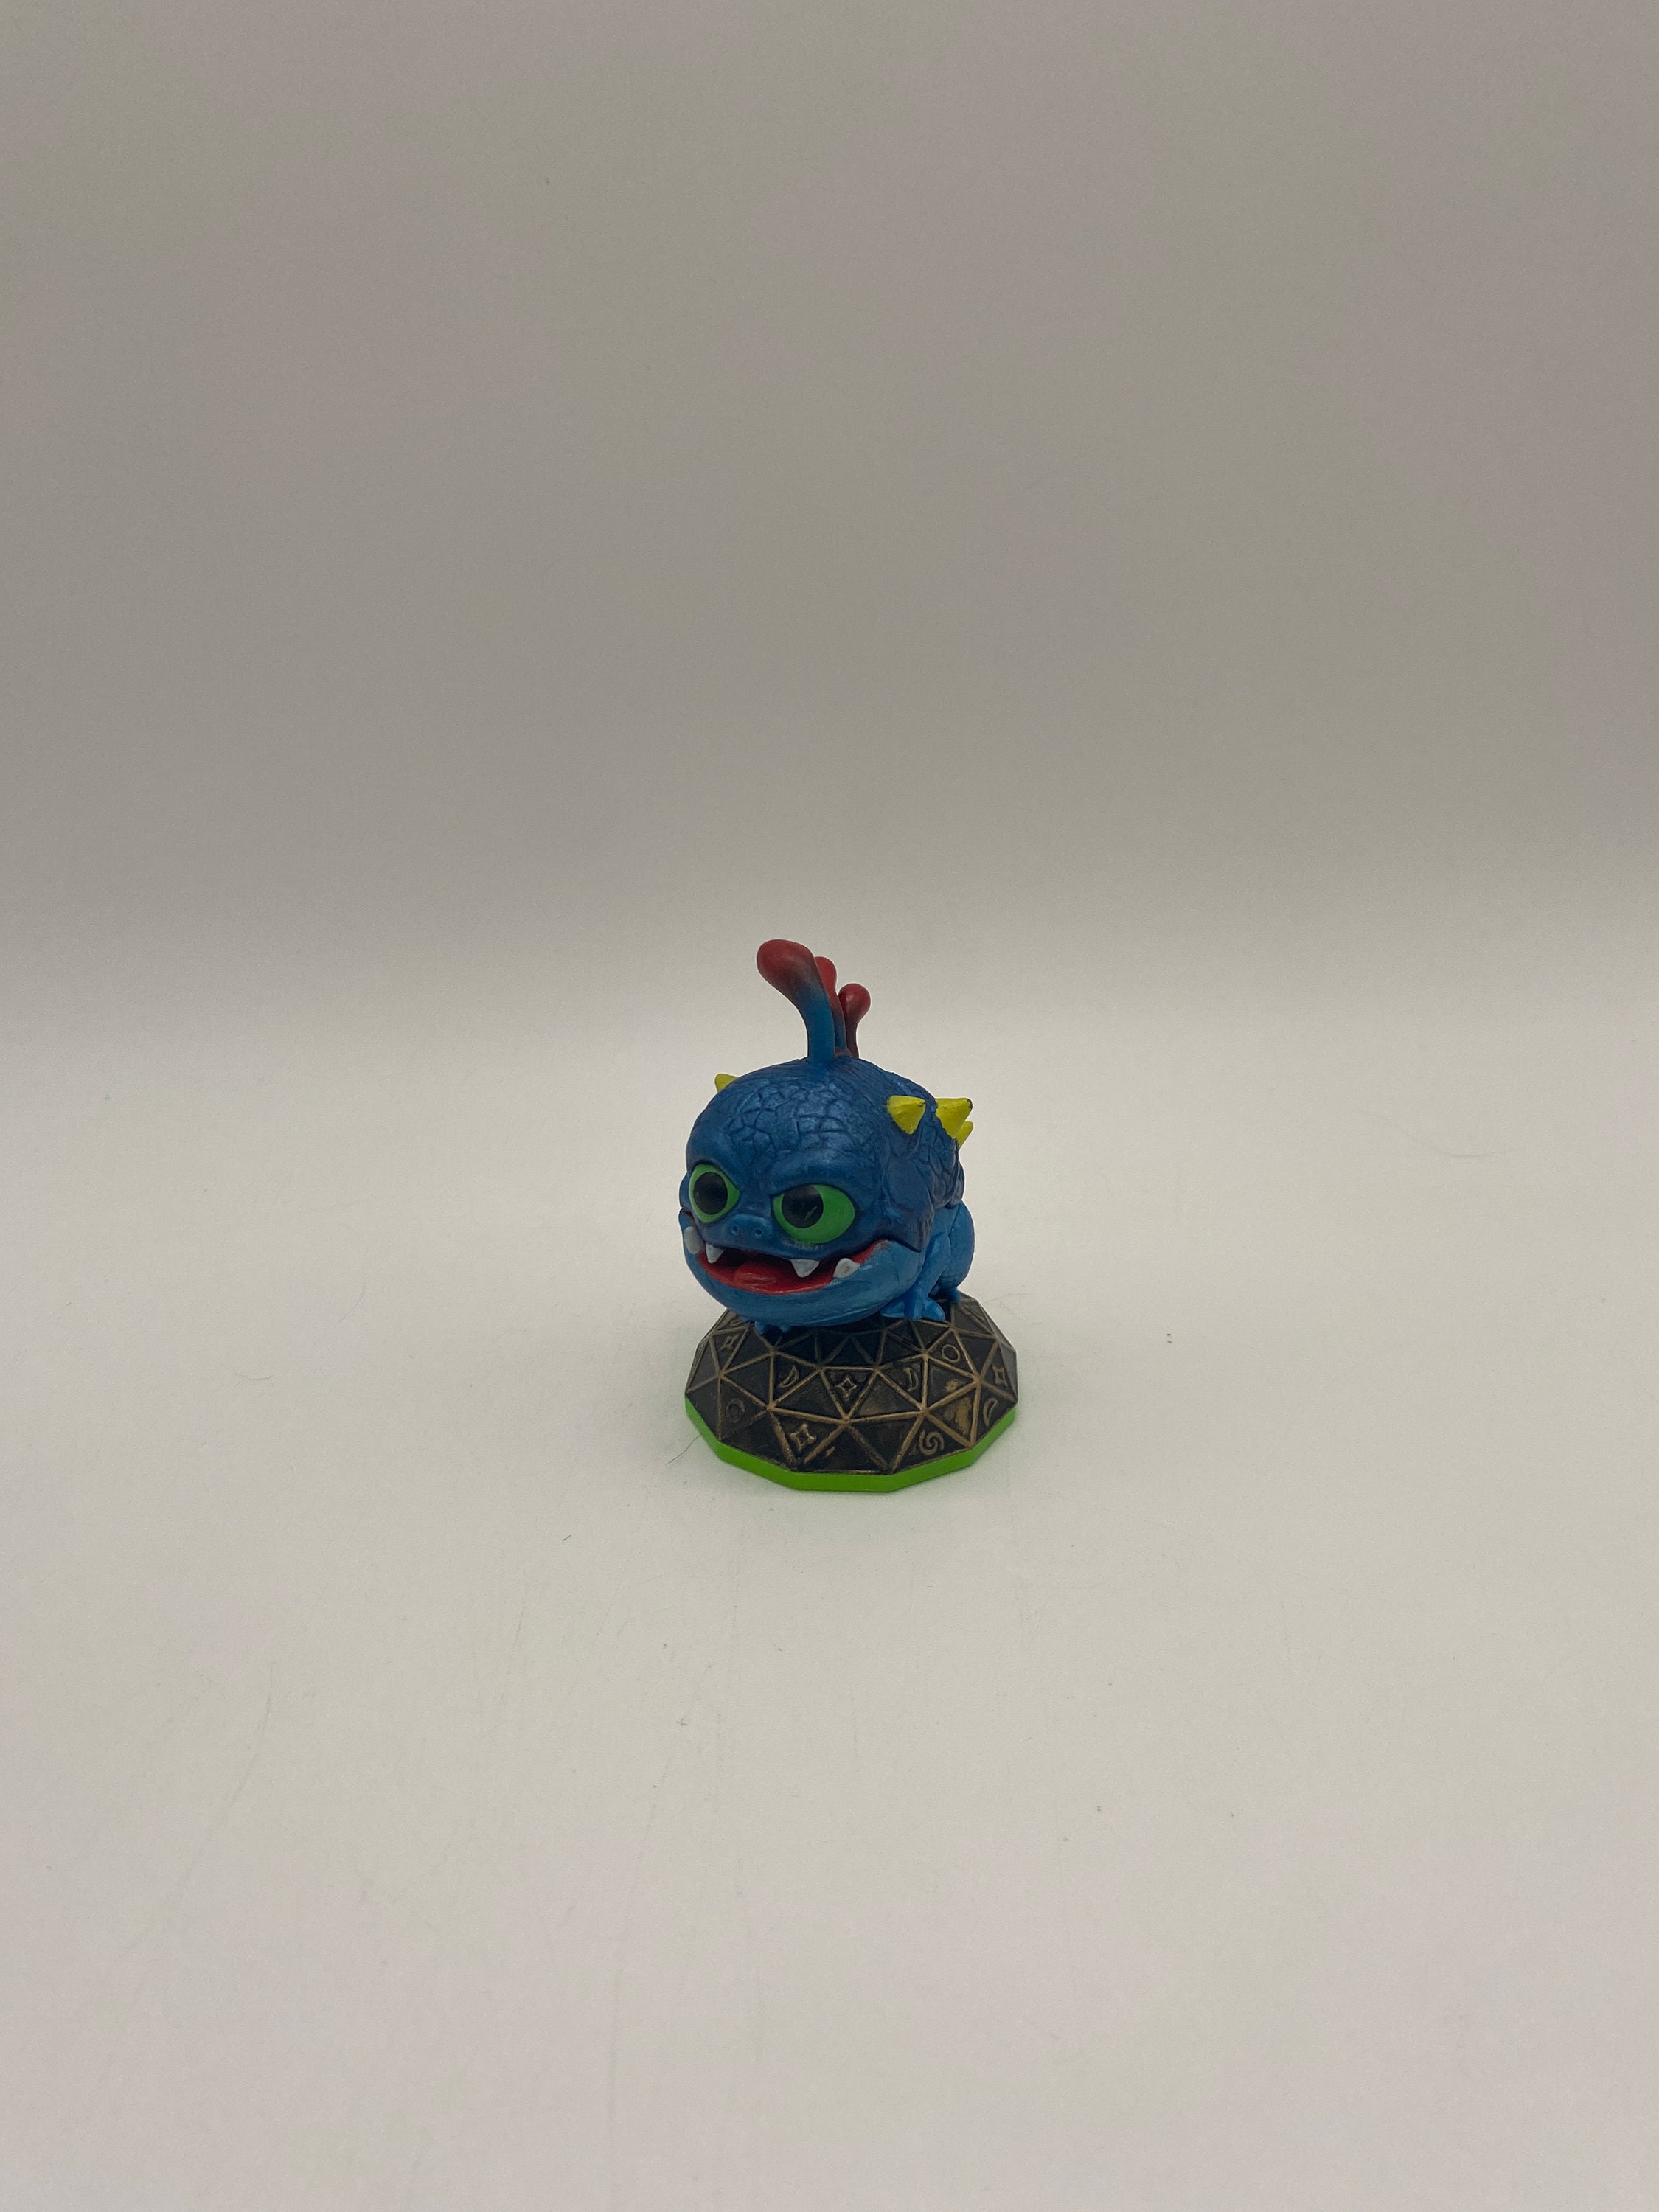 Wrecking Ball (Spyro's Adventure) - Skylanders Loose Figure For Sale